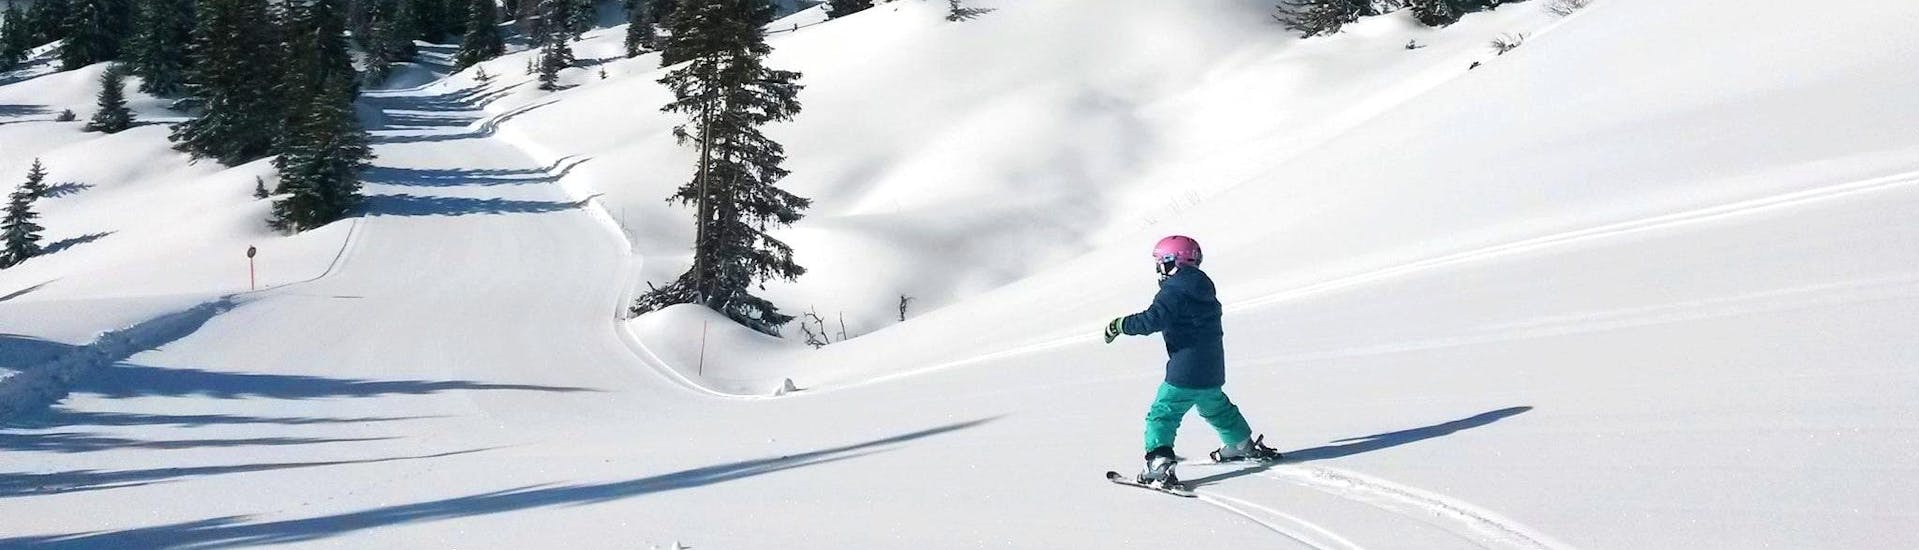 private-ski-lessons-for-kids-leysinski-hero